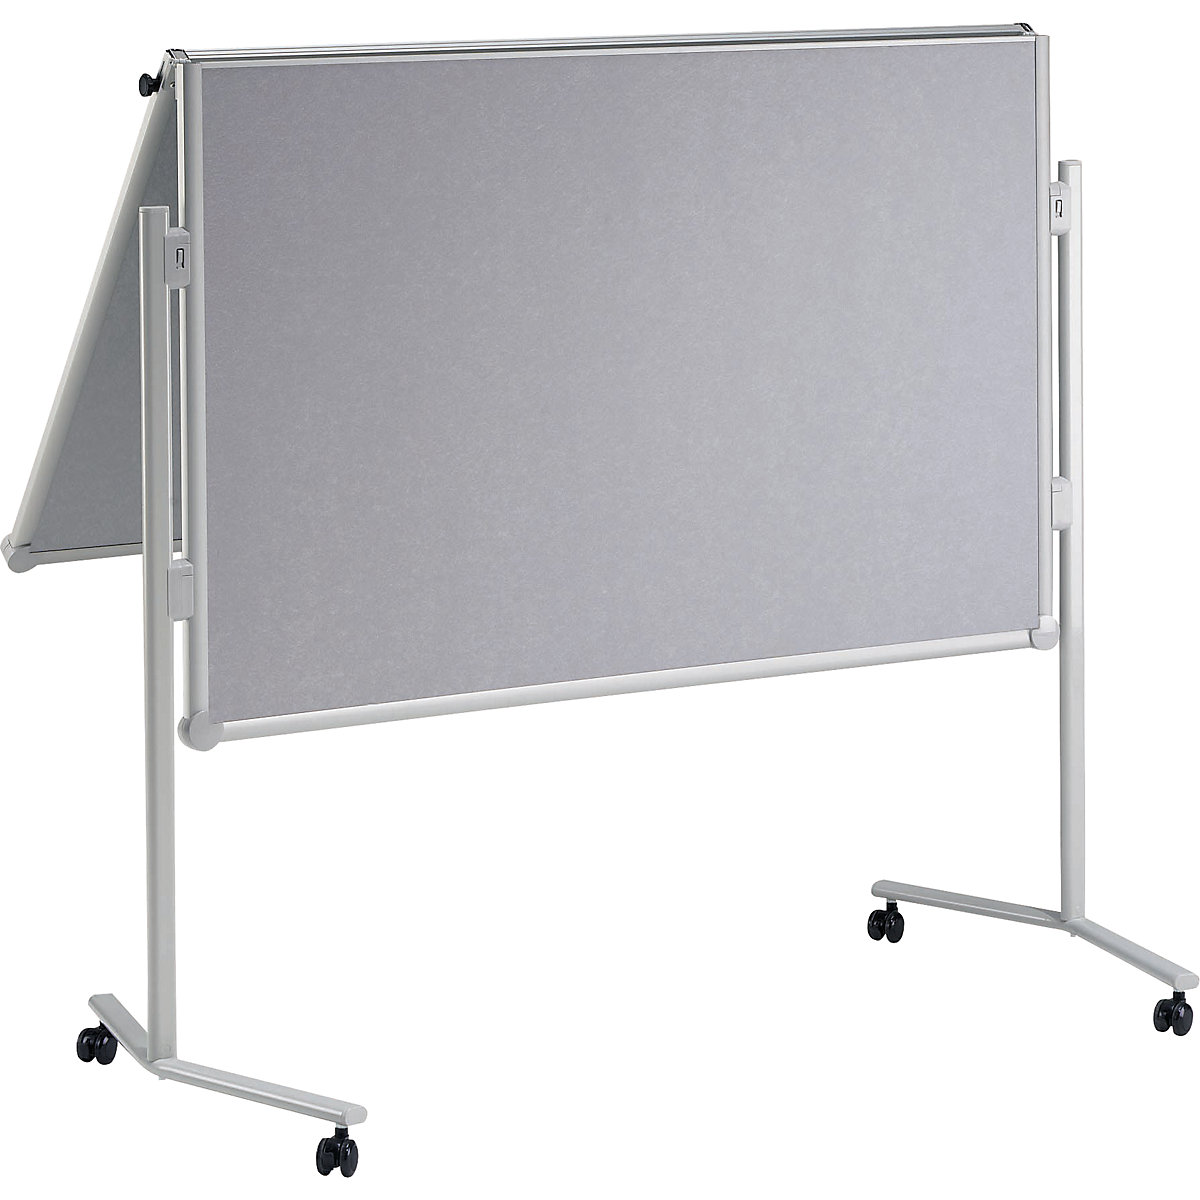 MAUL Moderationstafel MAULpro, klappbar, Glasfaser-Oberfläche, BxH 1200 x 1500 mm